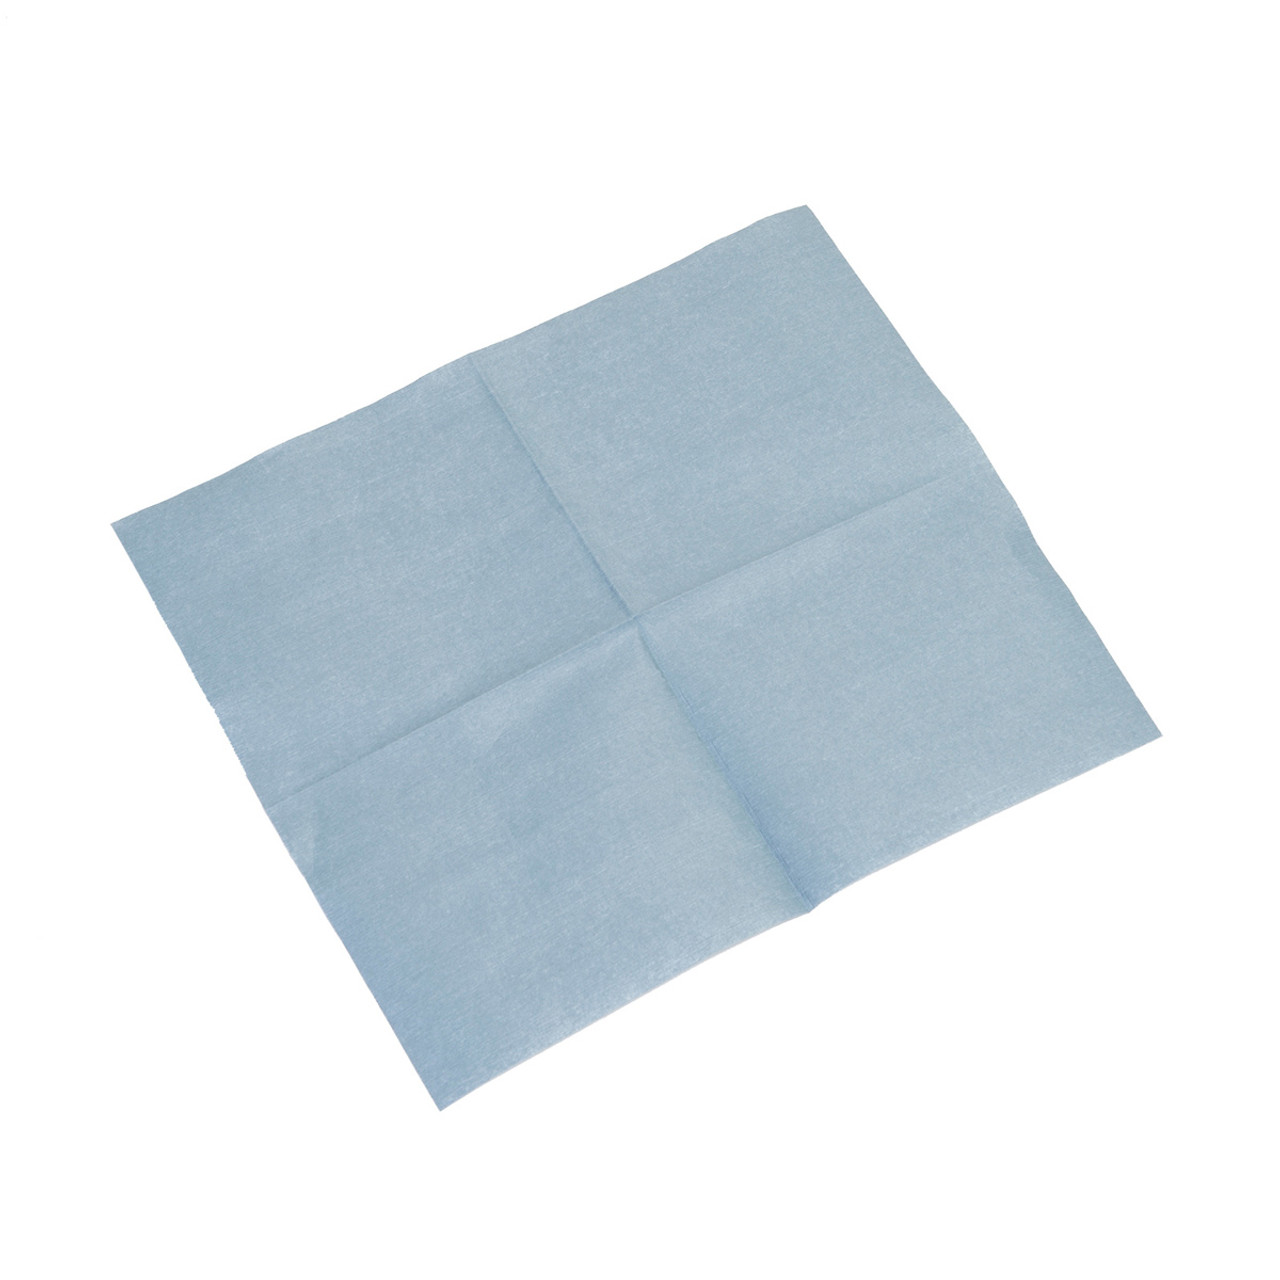 Sontara Industrial Wipes Quarter Fold Smooth Blue Wiper